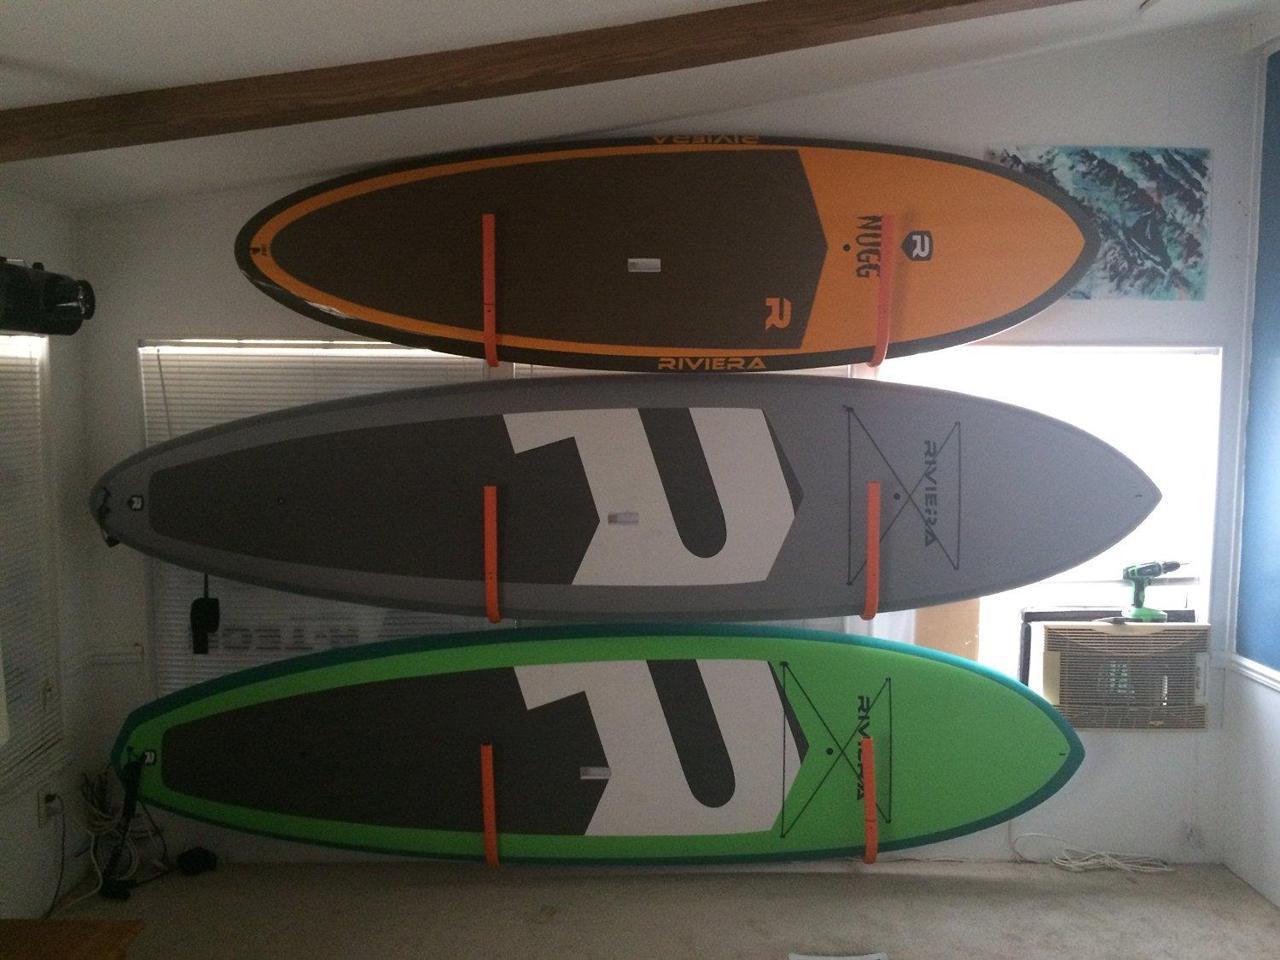 Shortboard Storage Management. Kiteboard Surfboard FITactic Metal Display Wall Rack Set for SUP Board Snowboard Wakeboard Longboards 